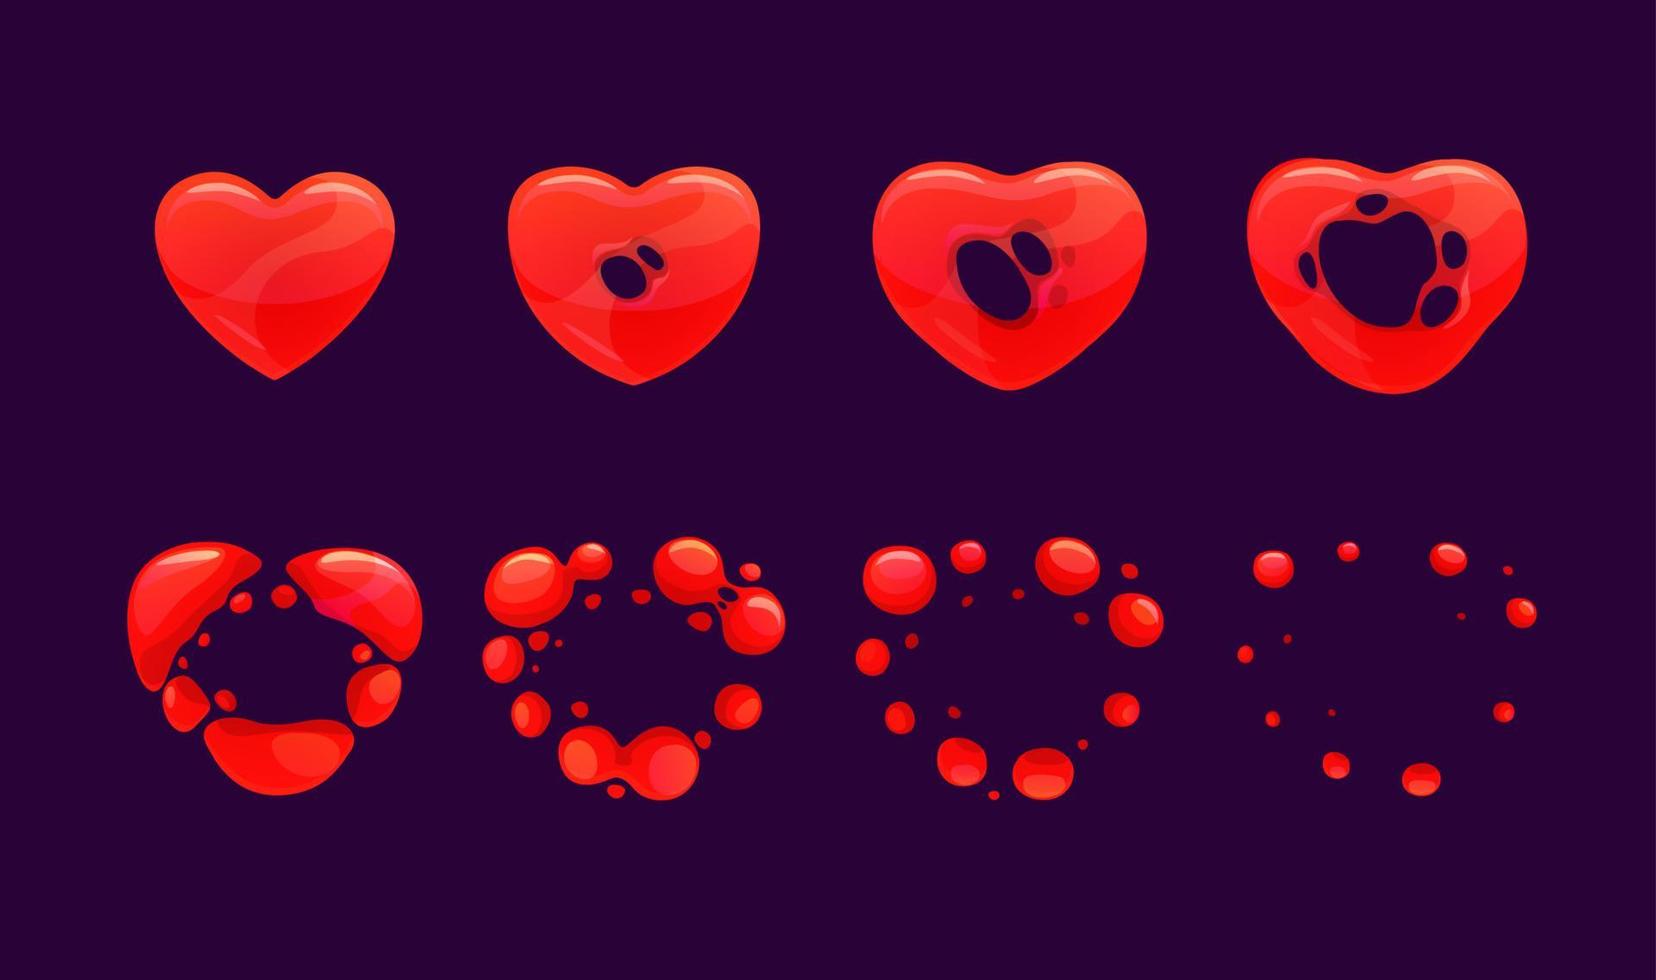 Heart explosion sprite, vector animation frame